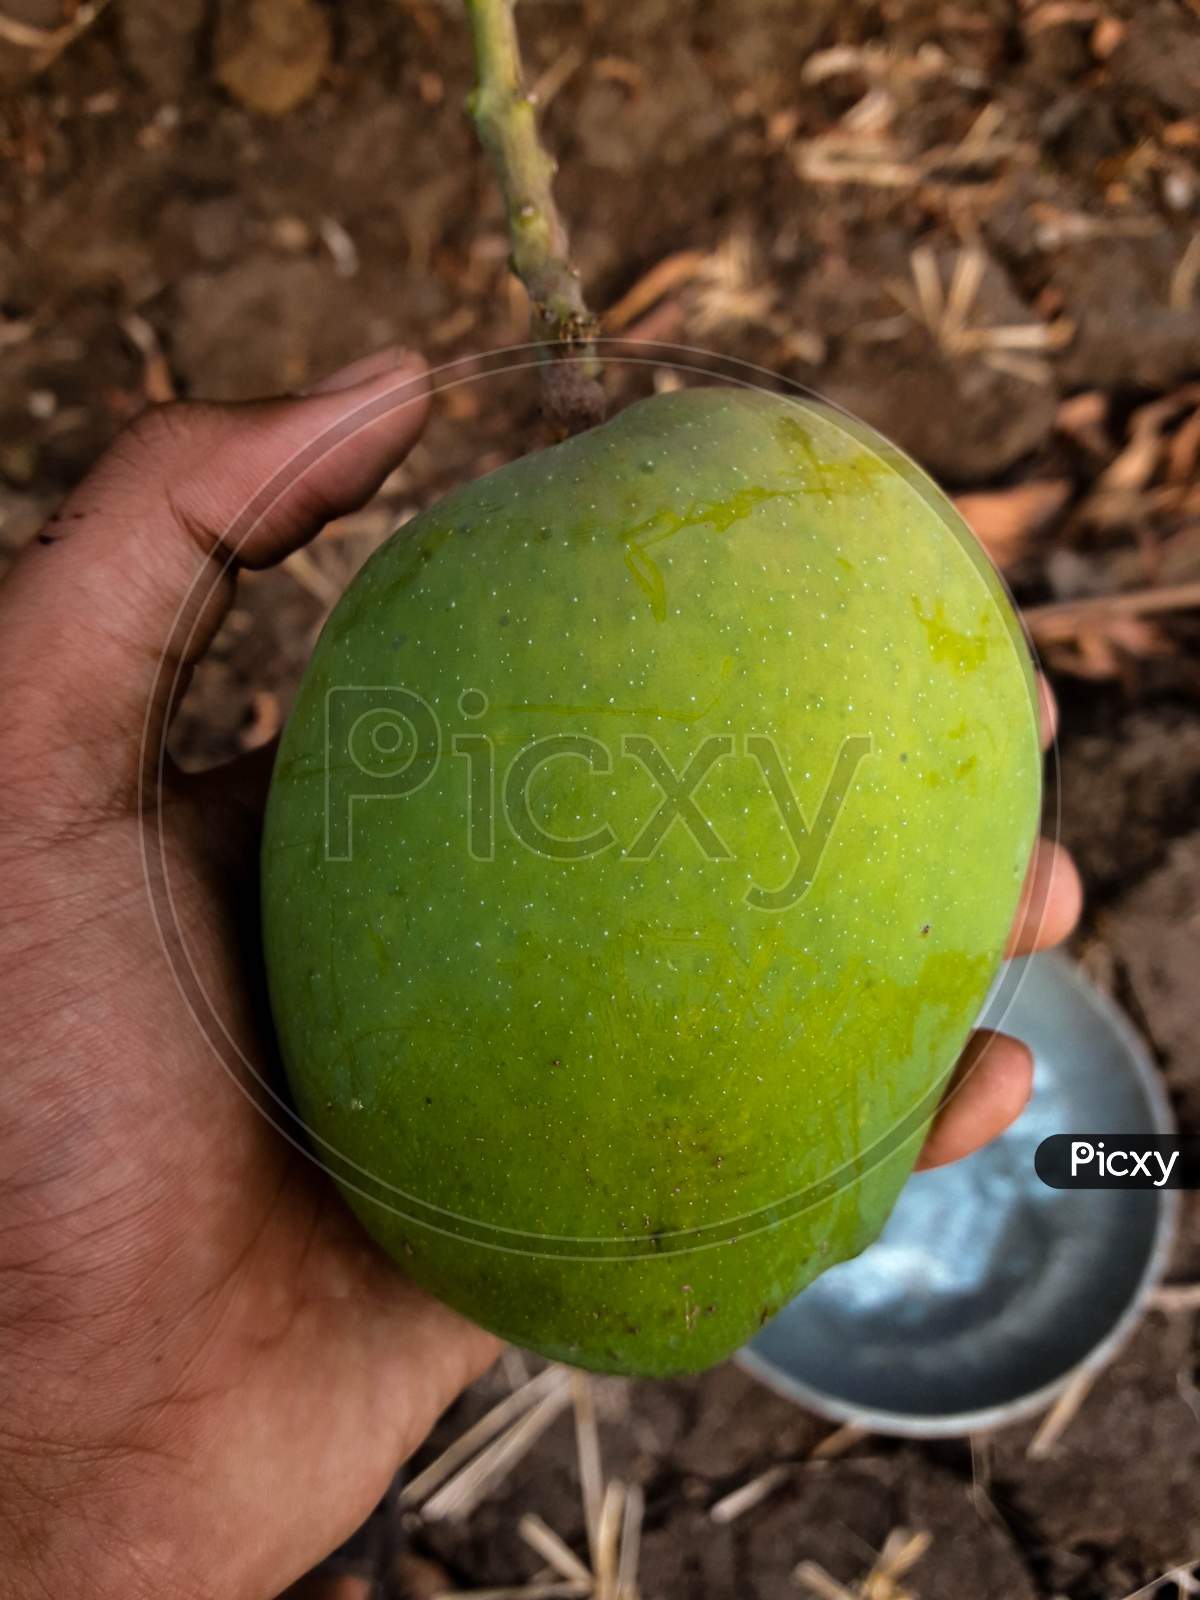 Mango in hand